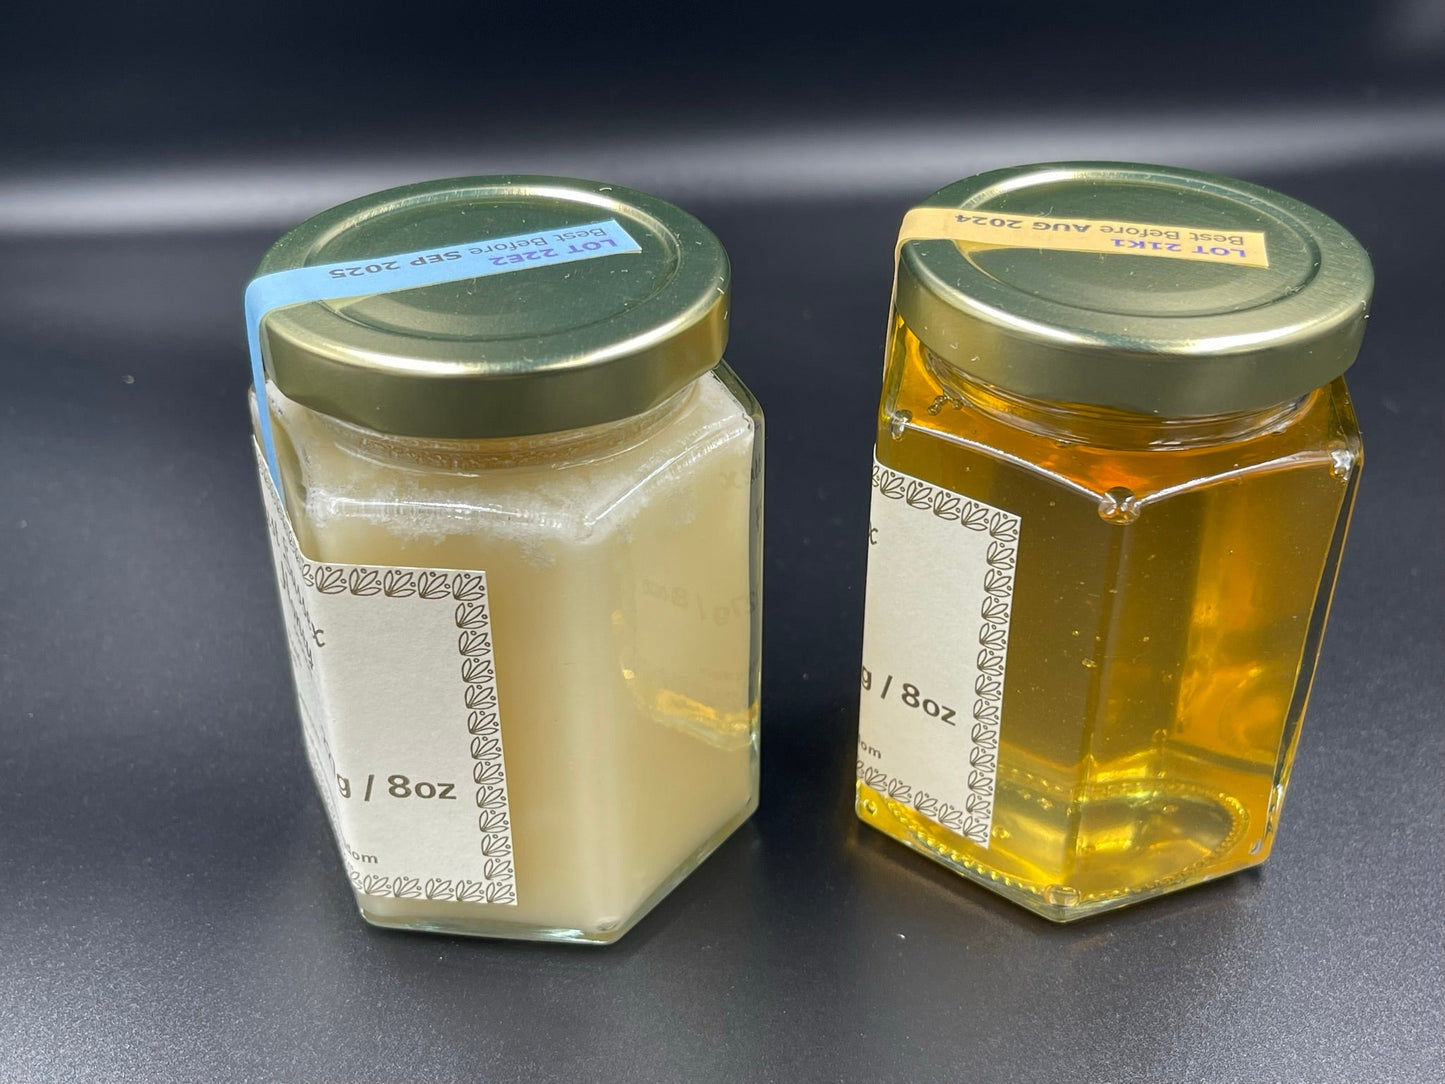 Classic Raw Honey, 3 jar set (2x227g/8oz) - two jars of Set honey, one jar of Liquid honey